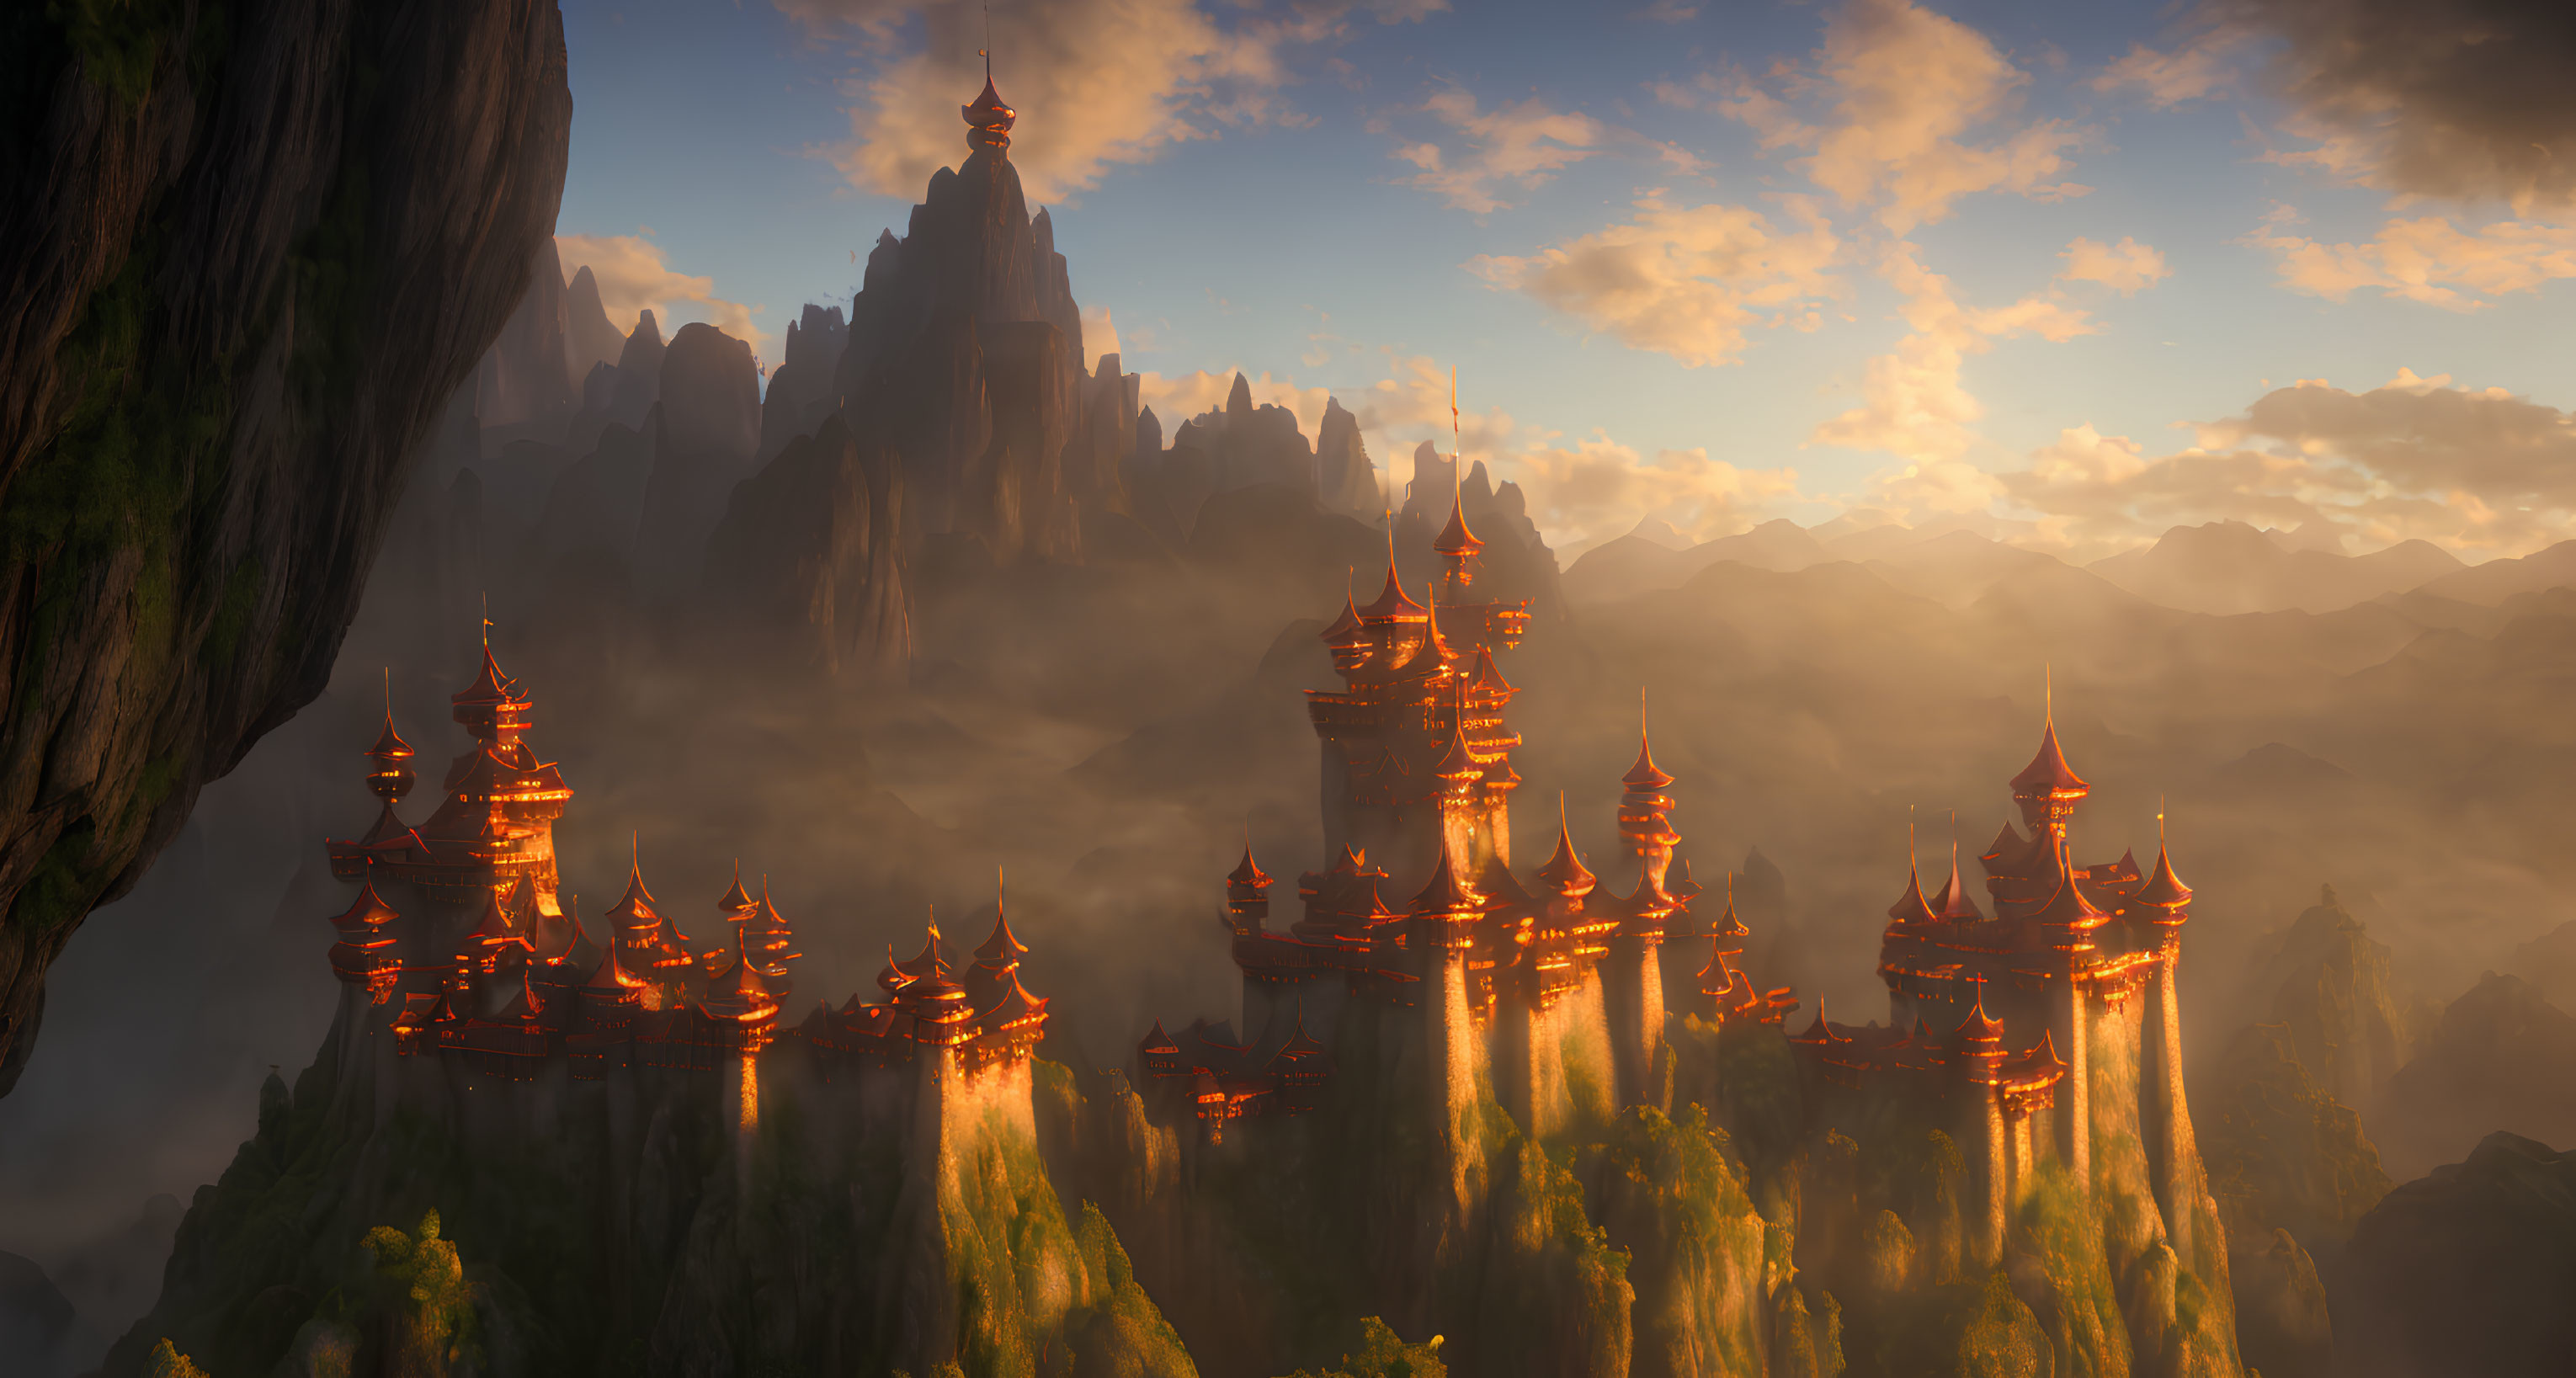 Majestic oriental-inspired castles on towering rock pillars at sunset